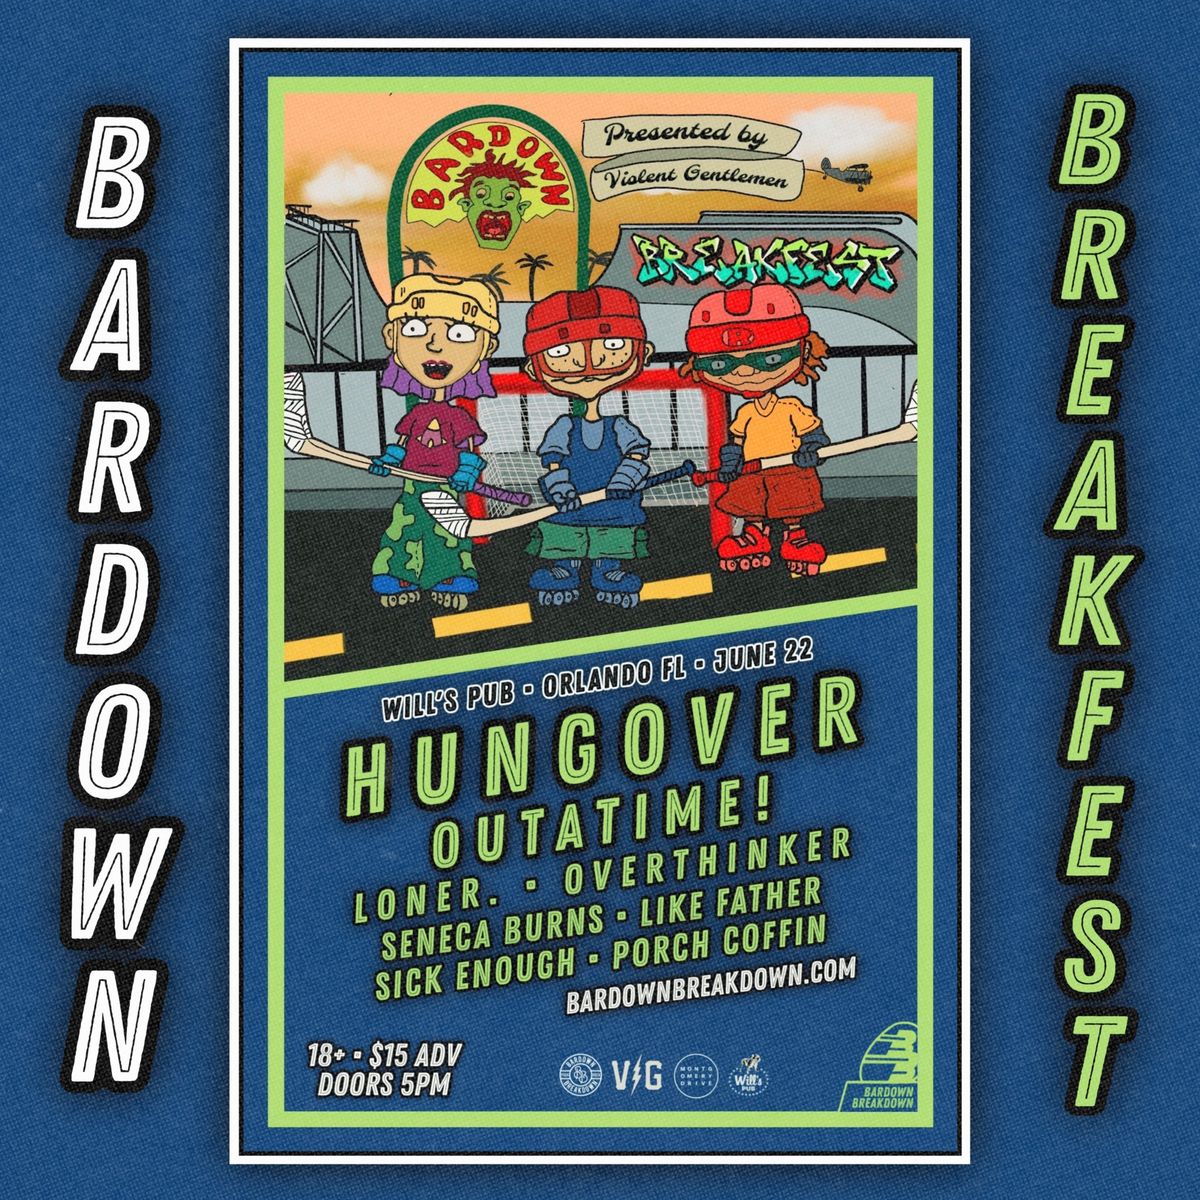 Bardown Breakfest 3 at Will\u2019s Pub - Orlando, FL